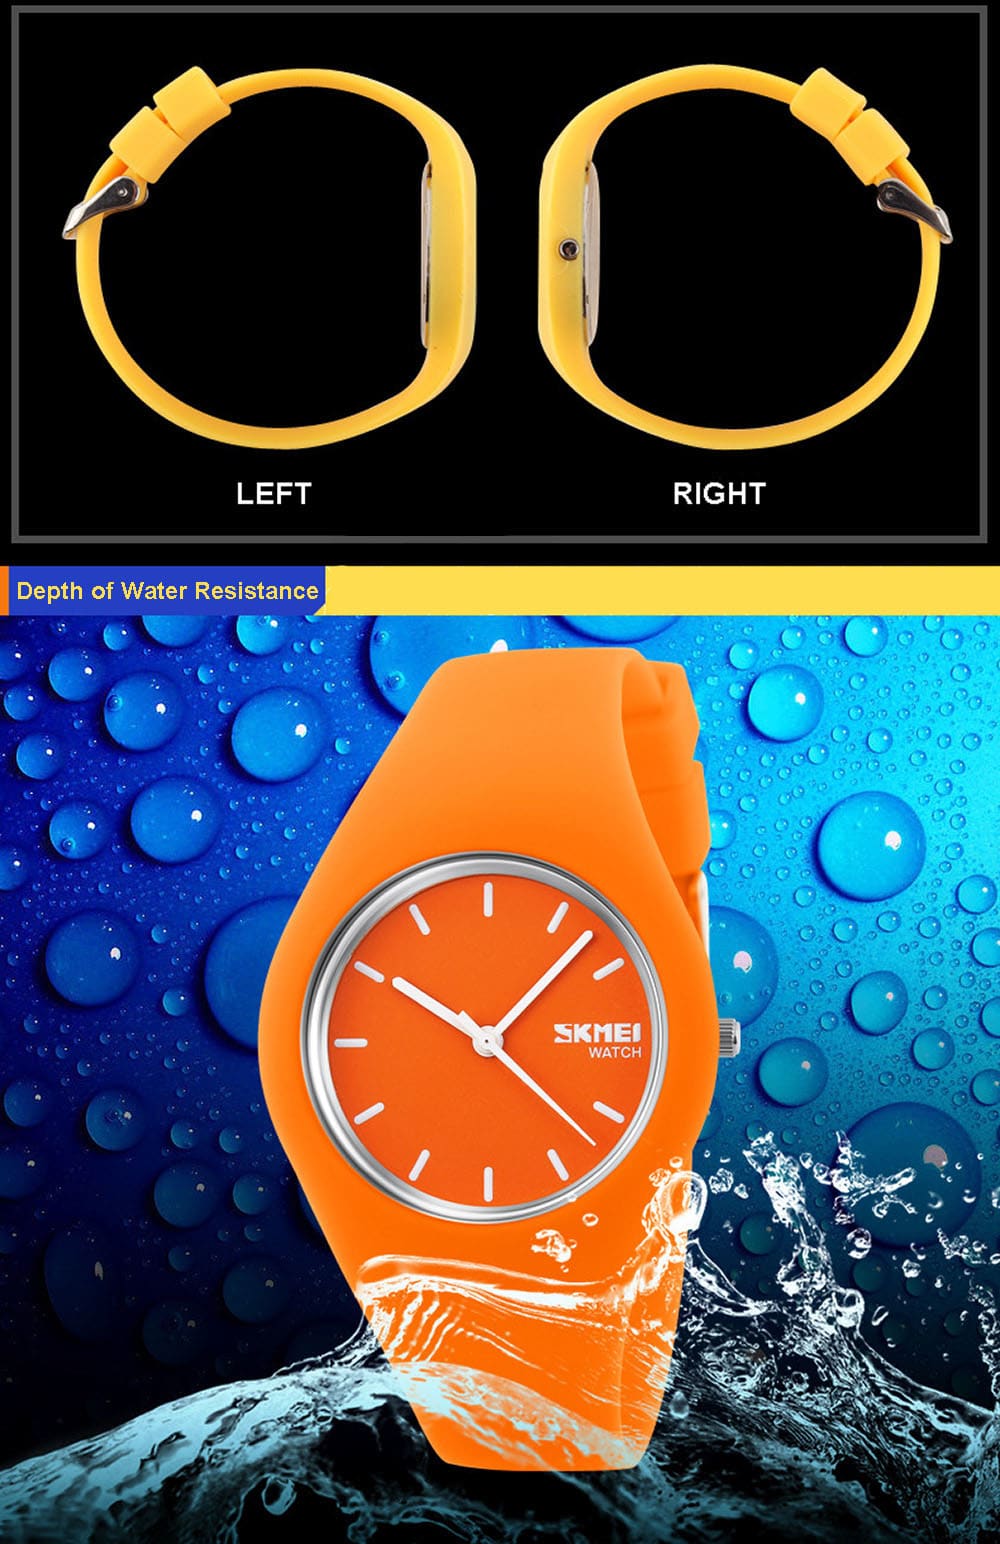 Skmei 9068 Sport Quartz Watch Silicon Strap Wristwatch for Men Women- White and Black